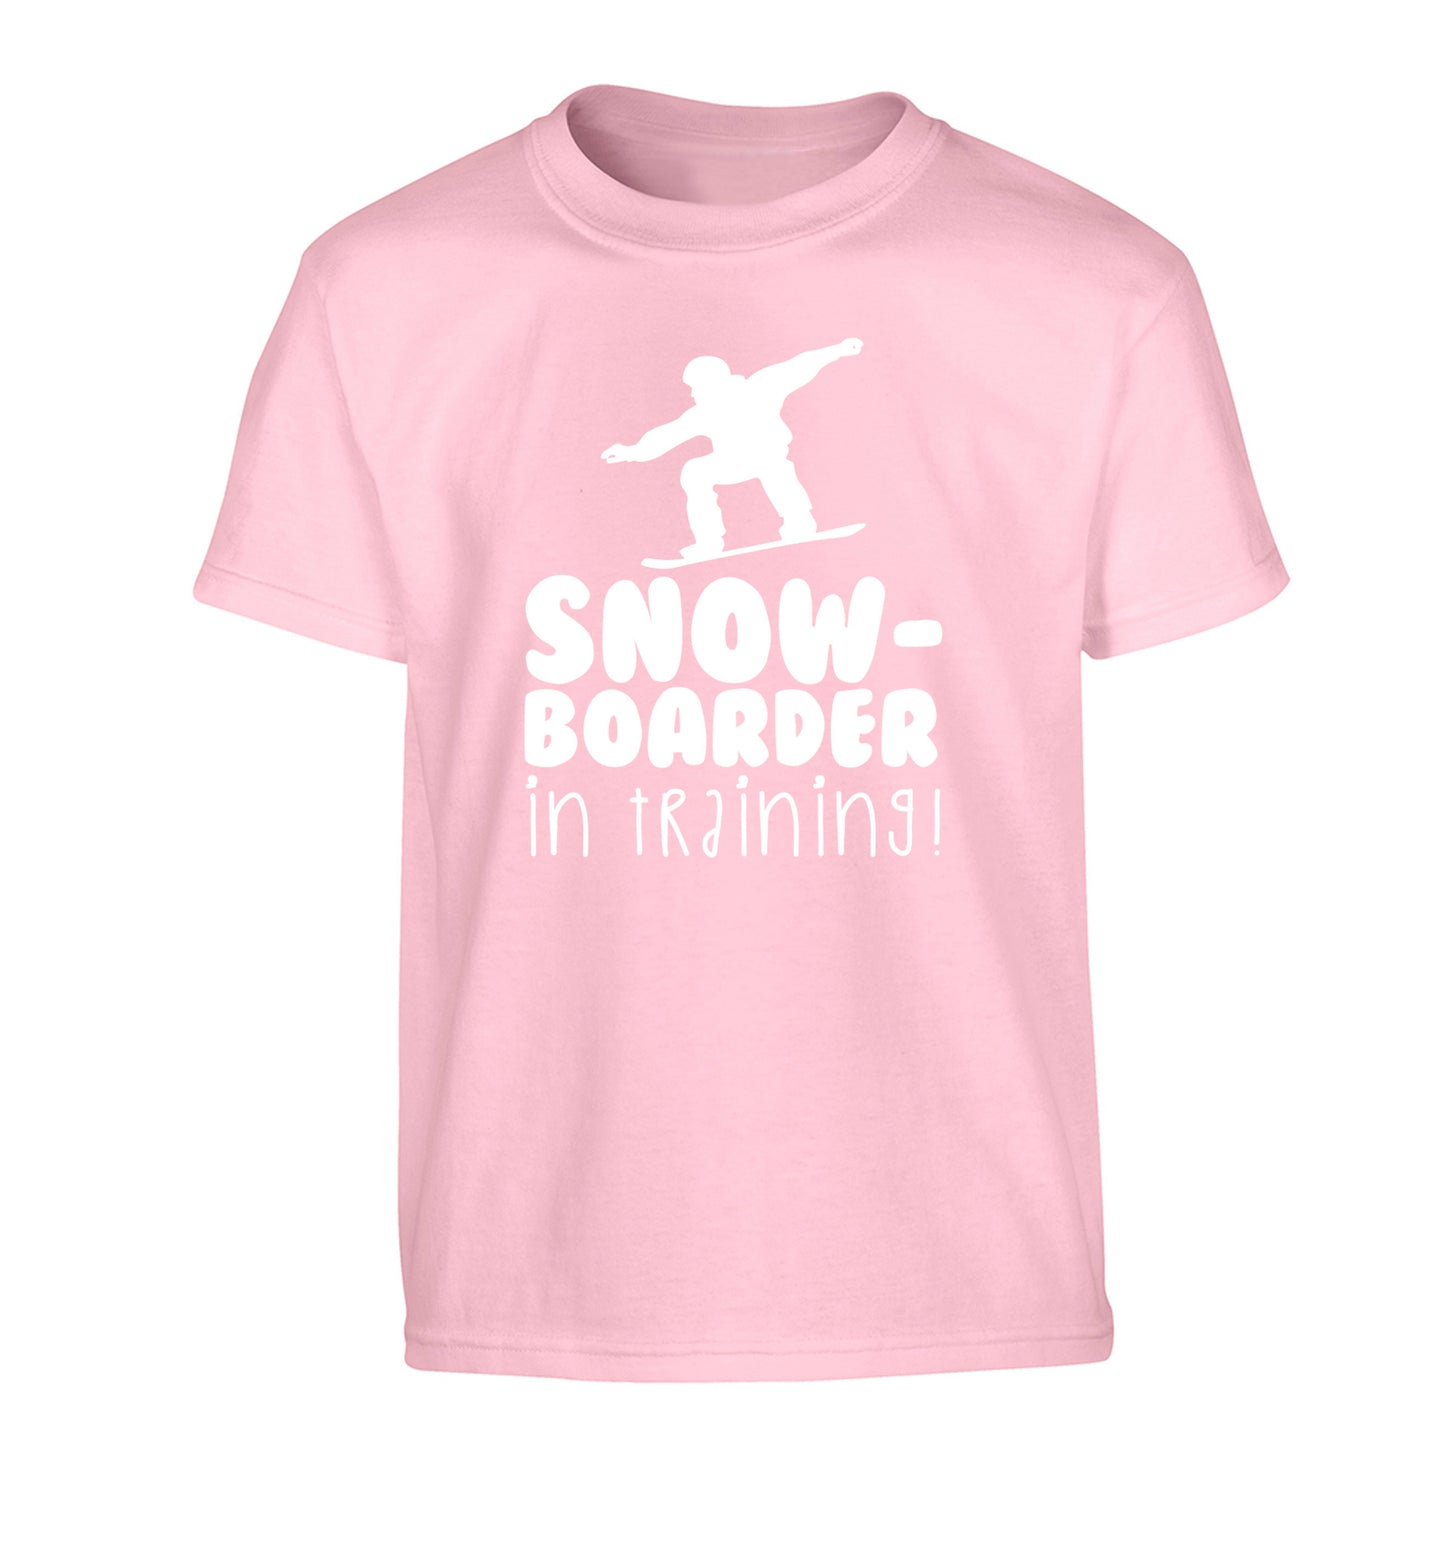 Snowboarder in training Children's light pink Tshirt 12-14 Years